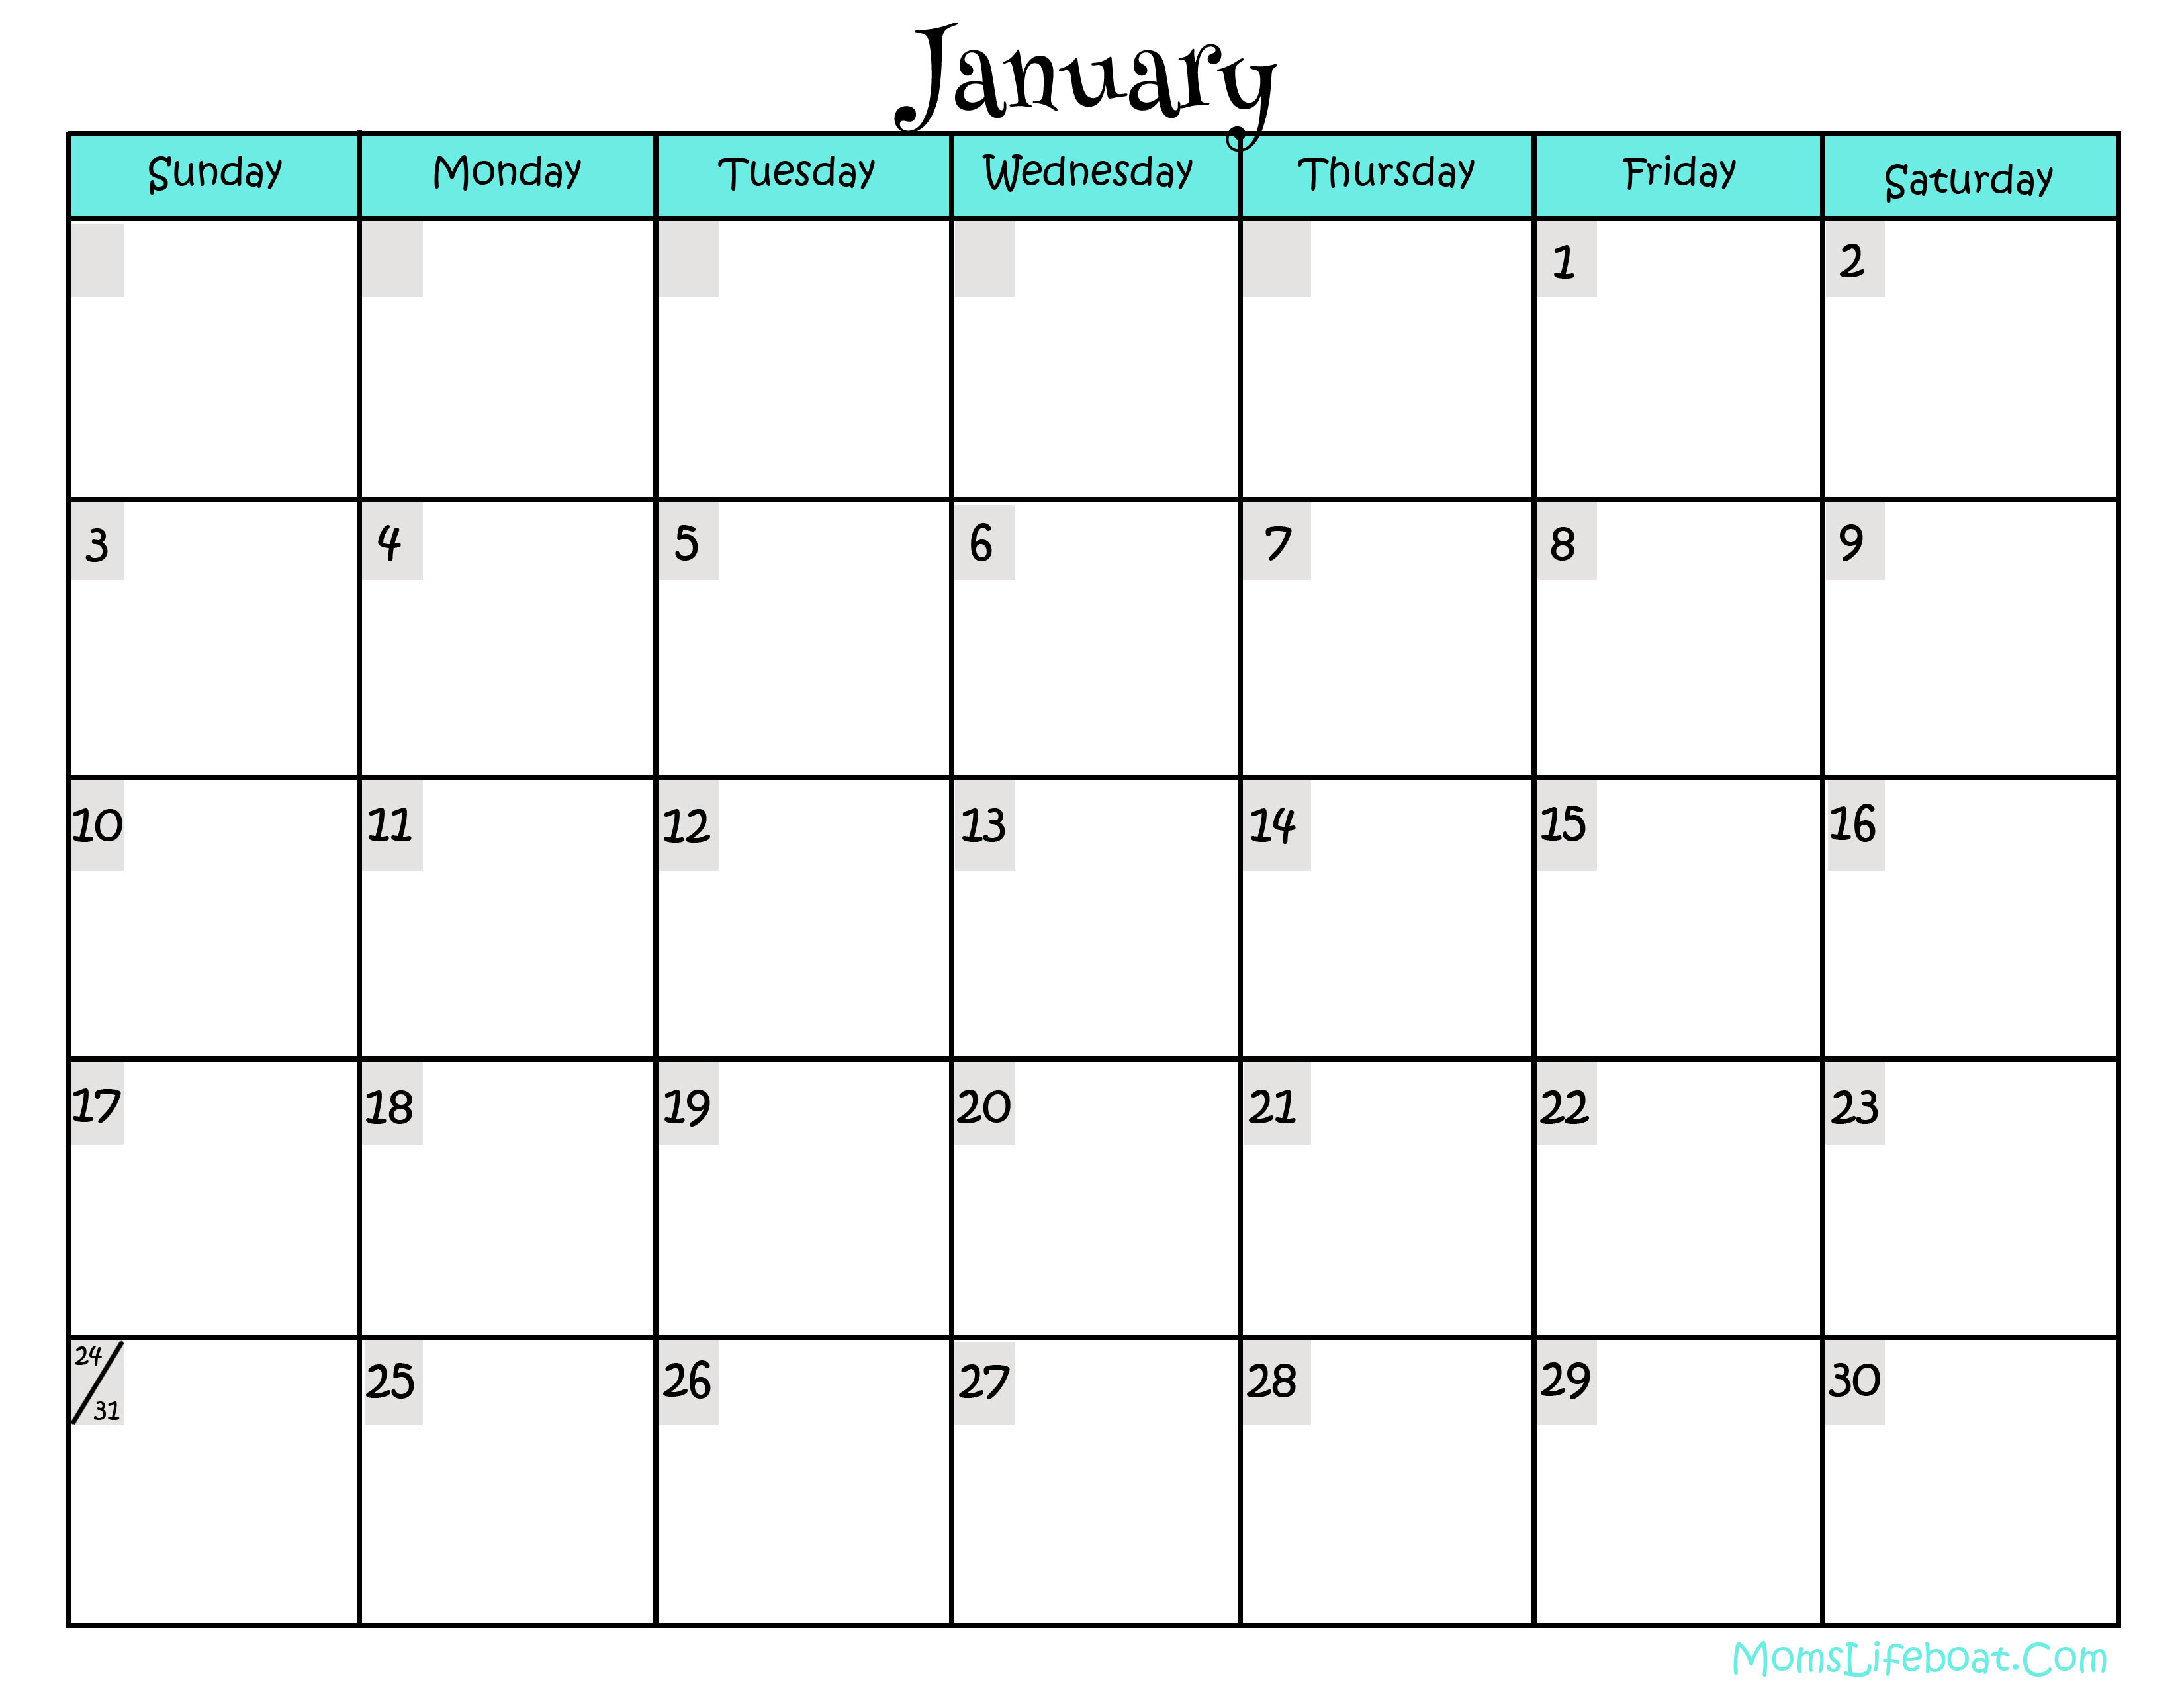 Calendar 2015 Monthly Planner  Topa.mastersathletics.co with regard to Vertex42 Monthly Calendar